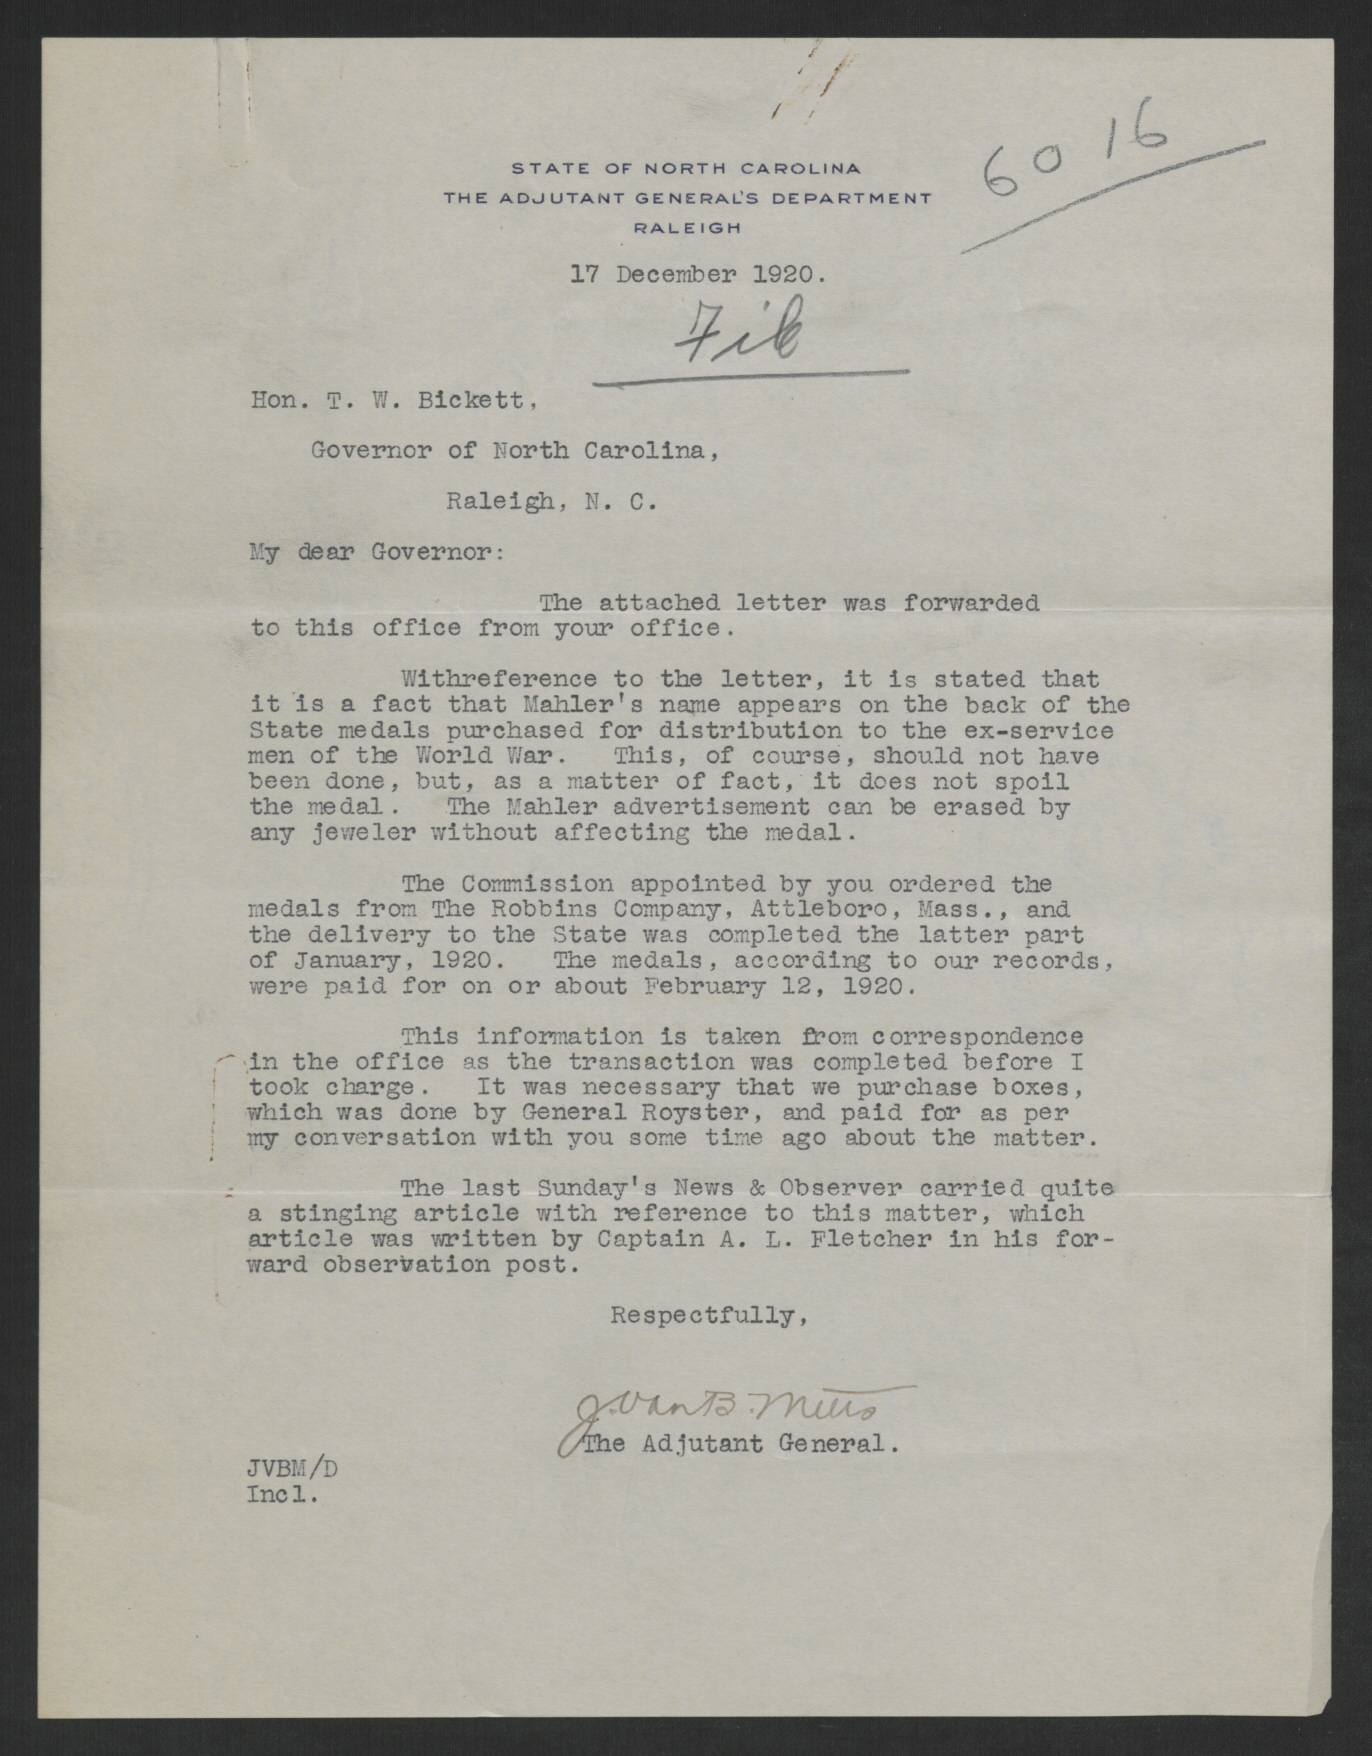 Letter from John V. B. Metts to Thomas W. Bickett, December 17, 1920